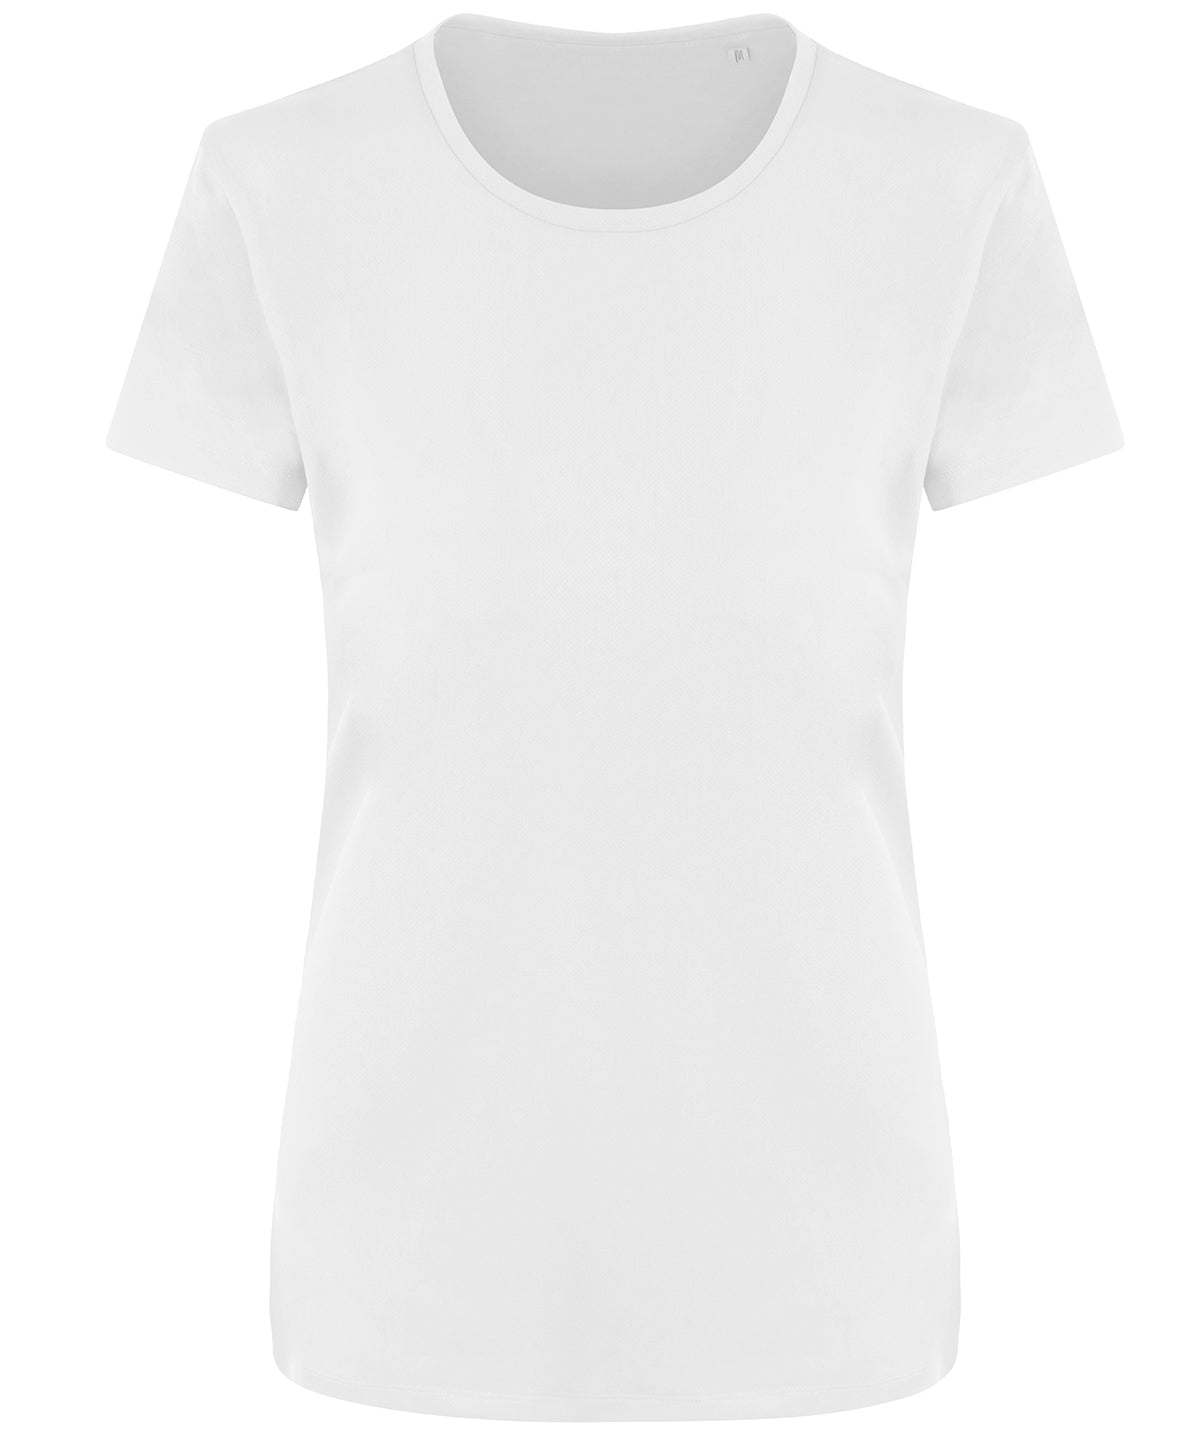 Personalised T-Shirts - White AWDis Ecologie Women's Ambaro recycled sports tee